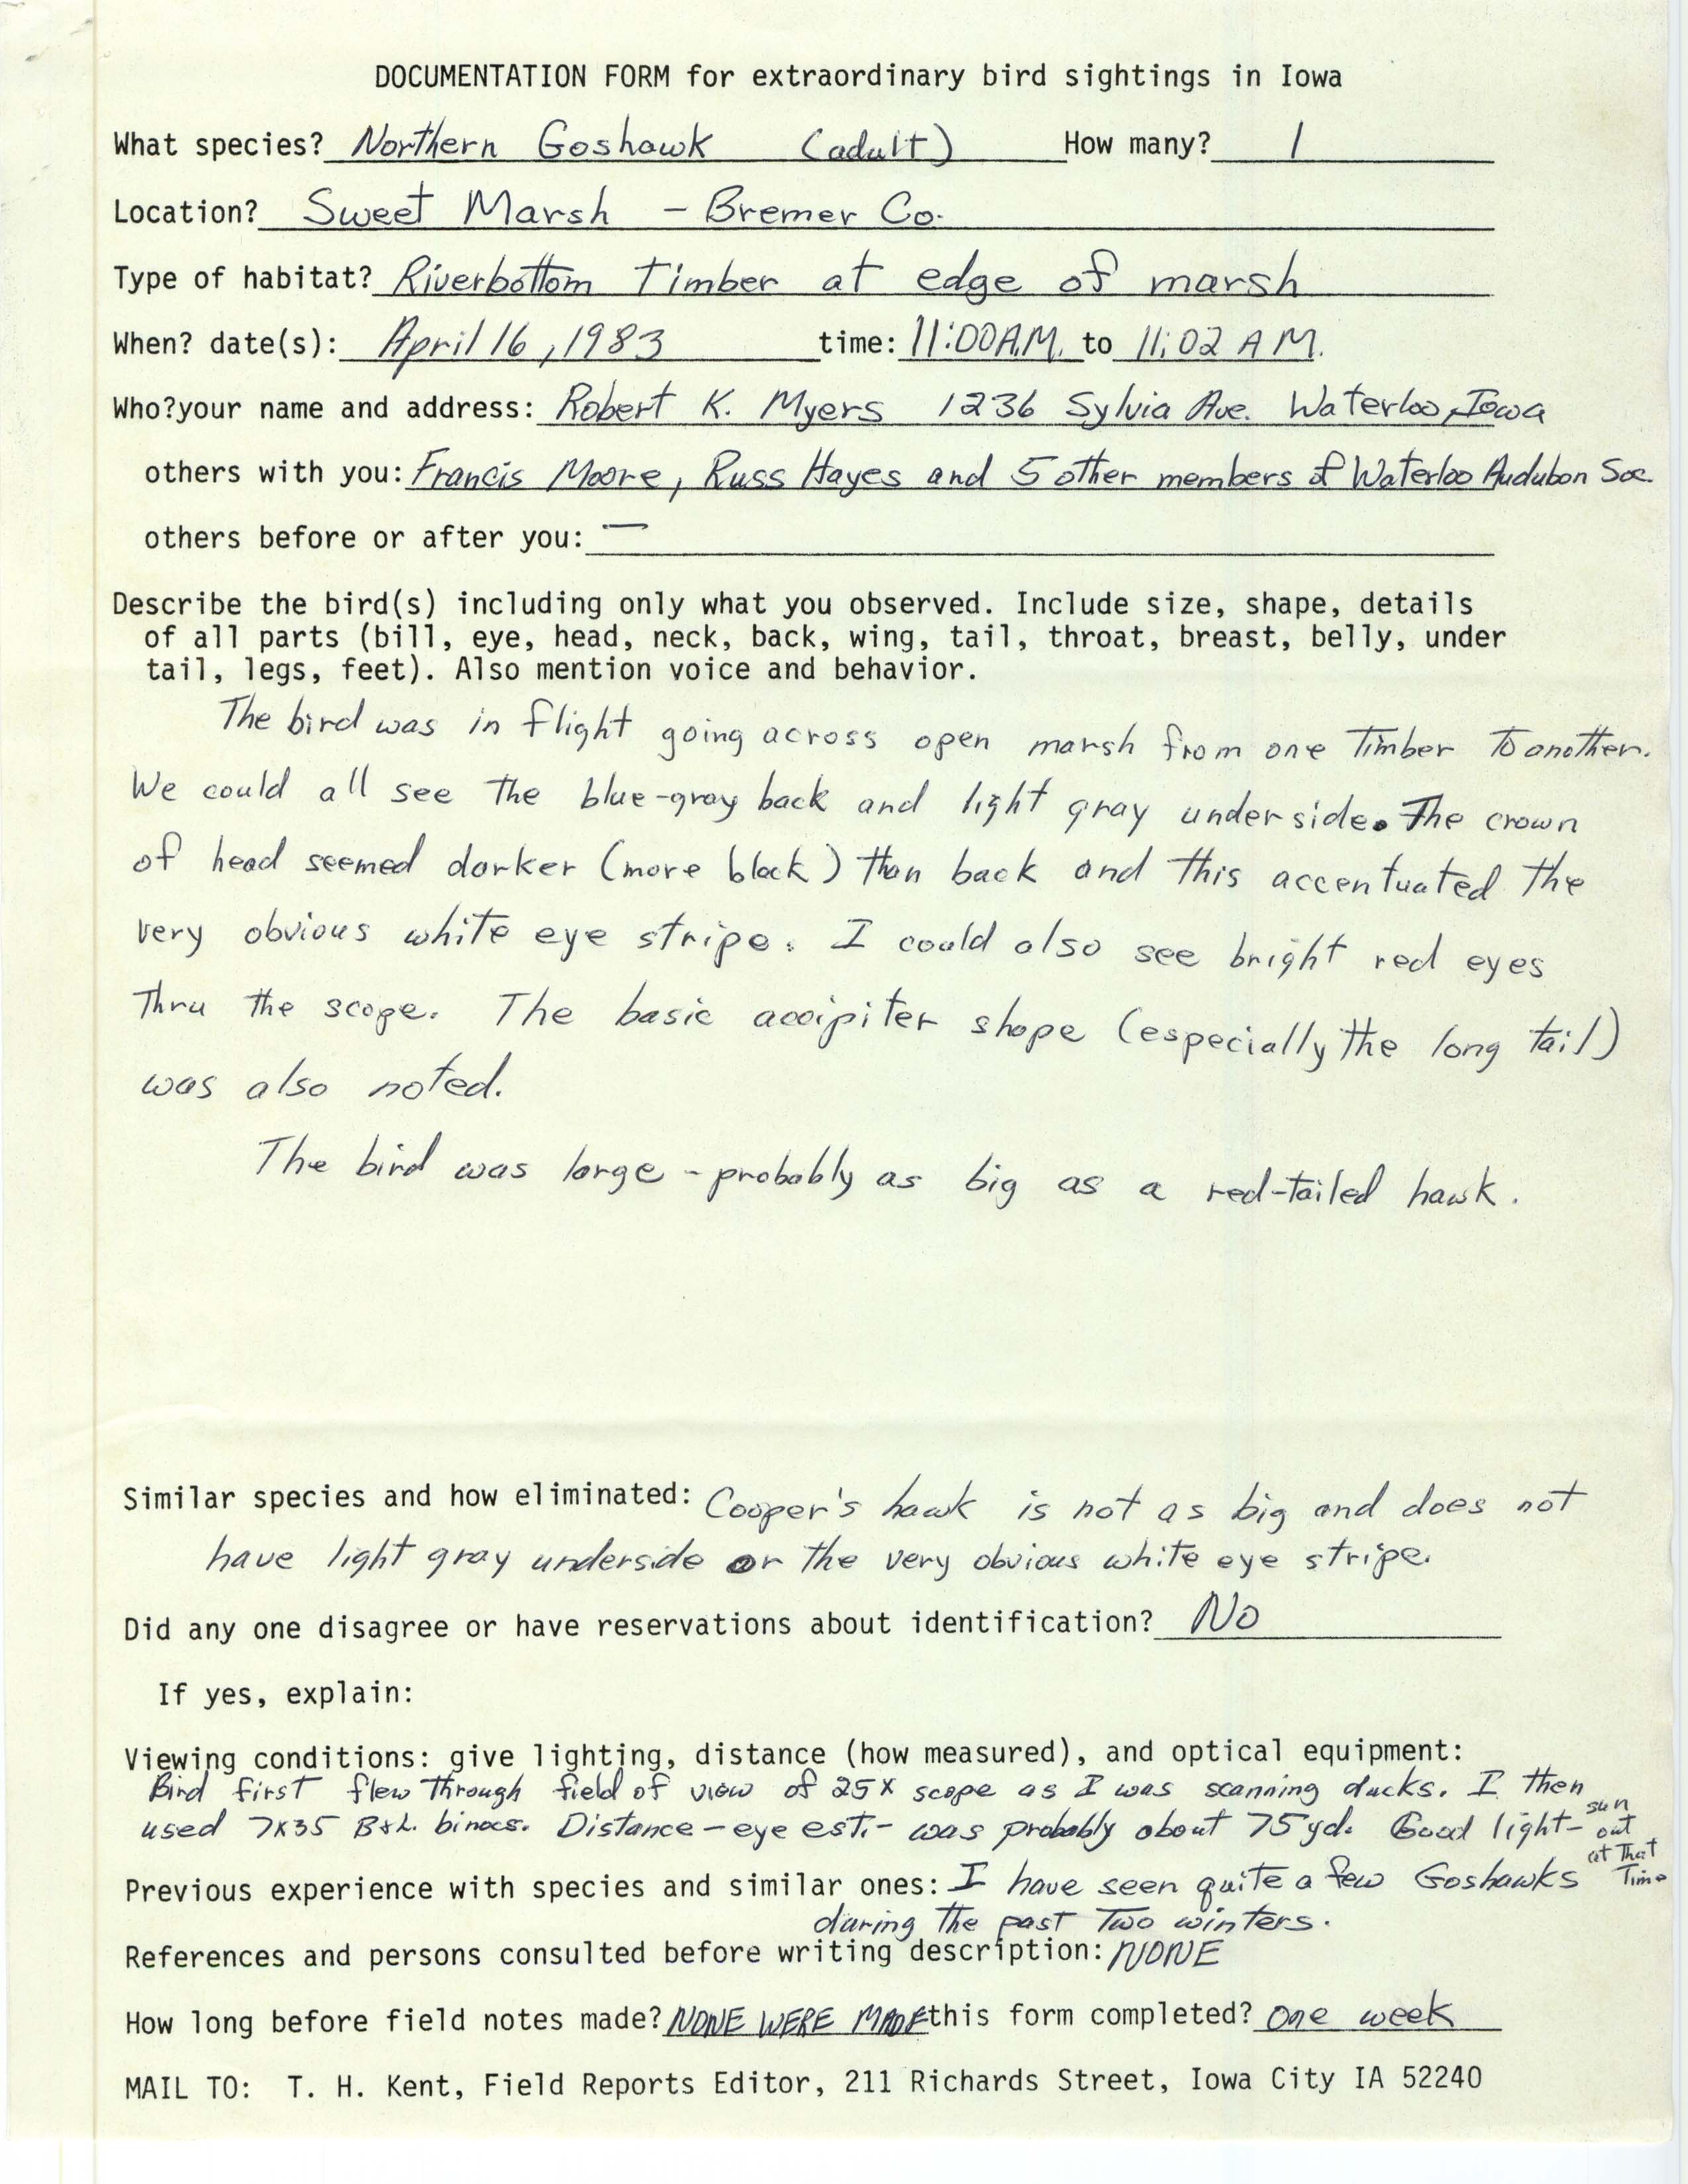 Rare bird documentation form for Northern Goshawk at Sweet Marsh in 1983